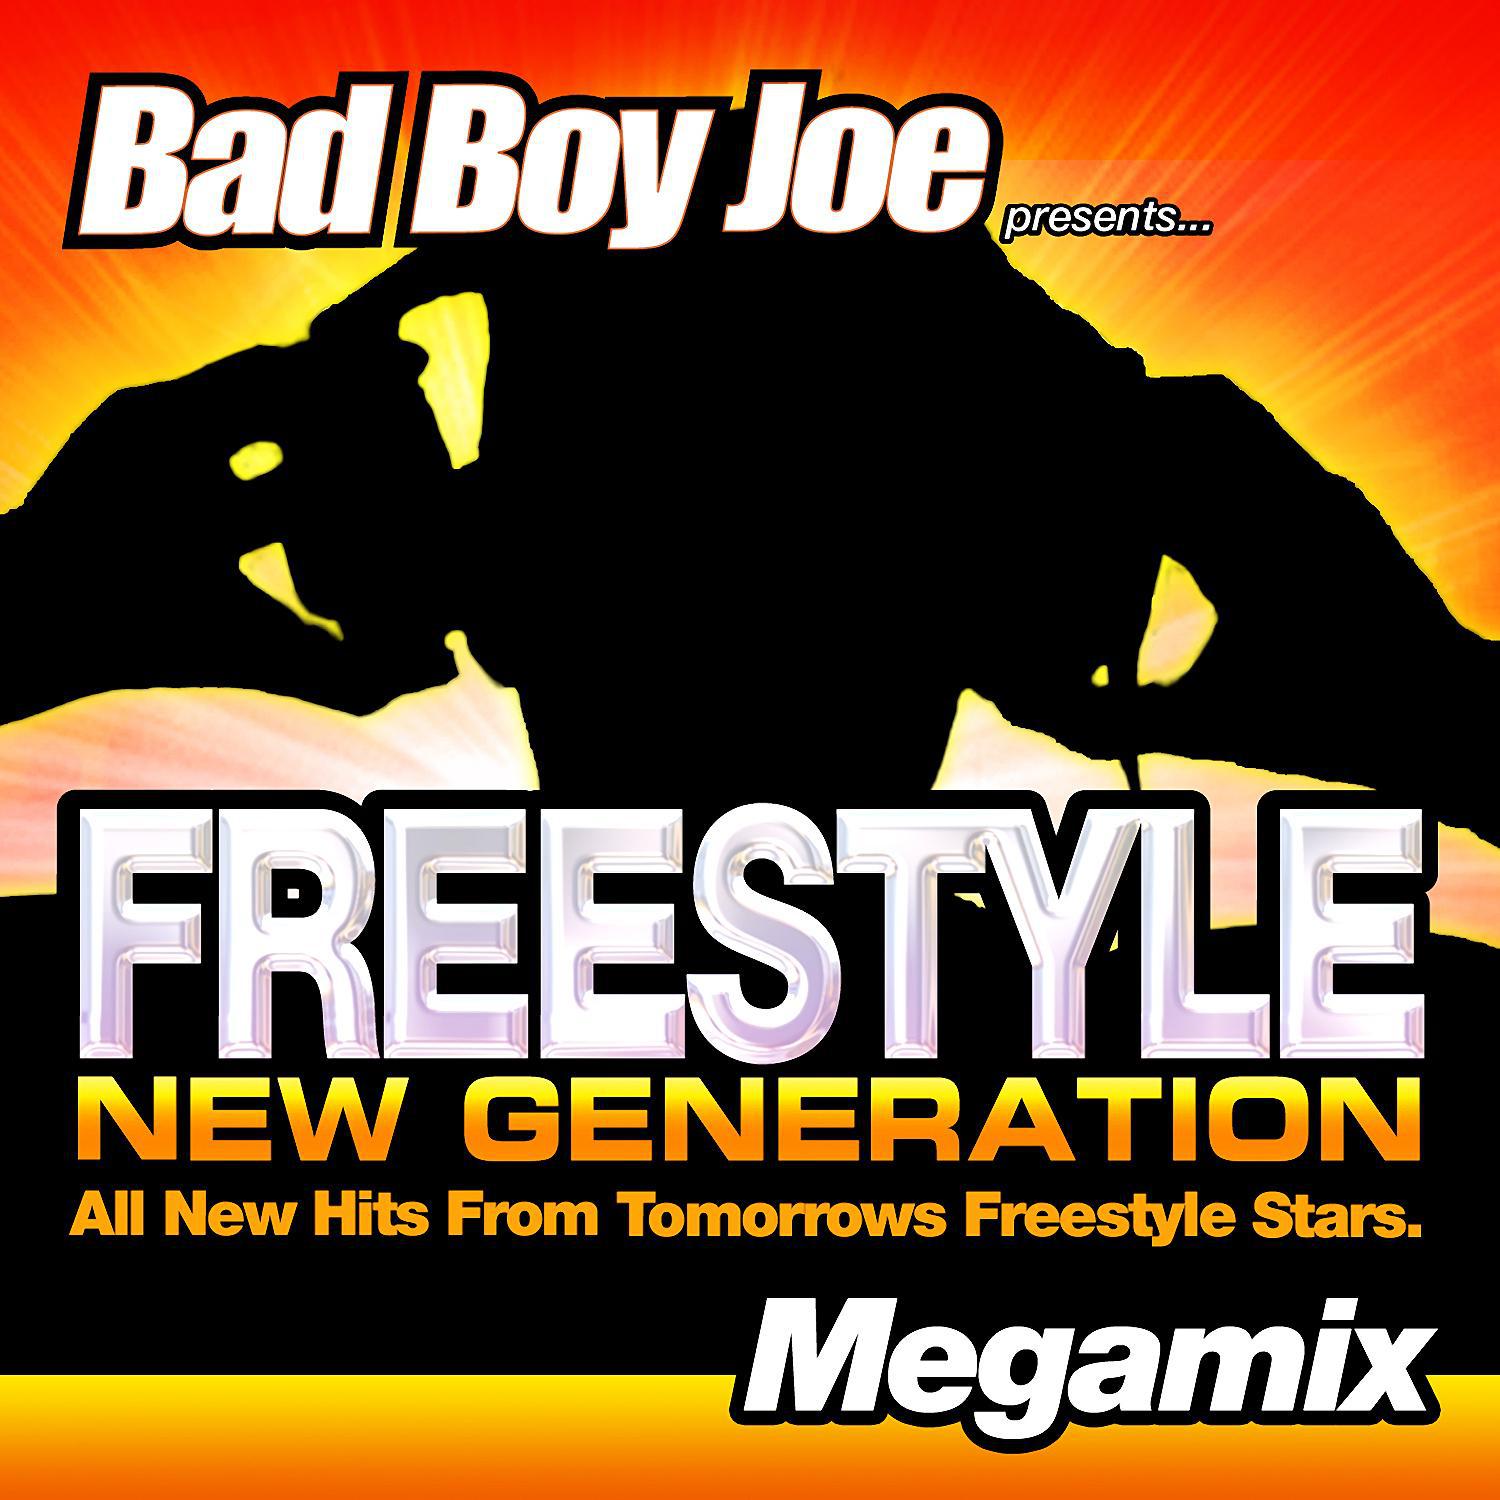 Badboyjoe's Freestyle New Generation Megamix